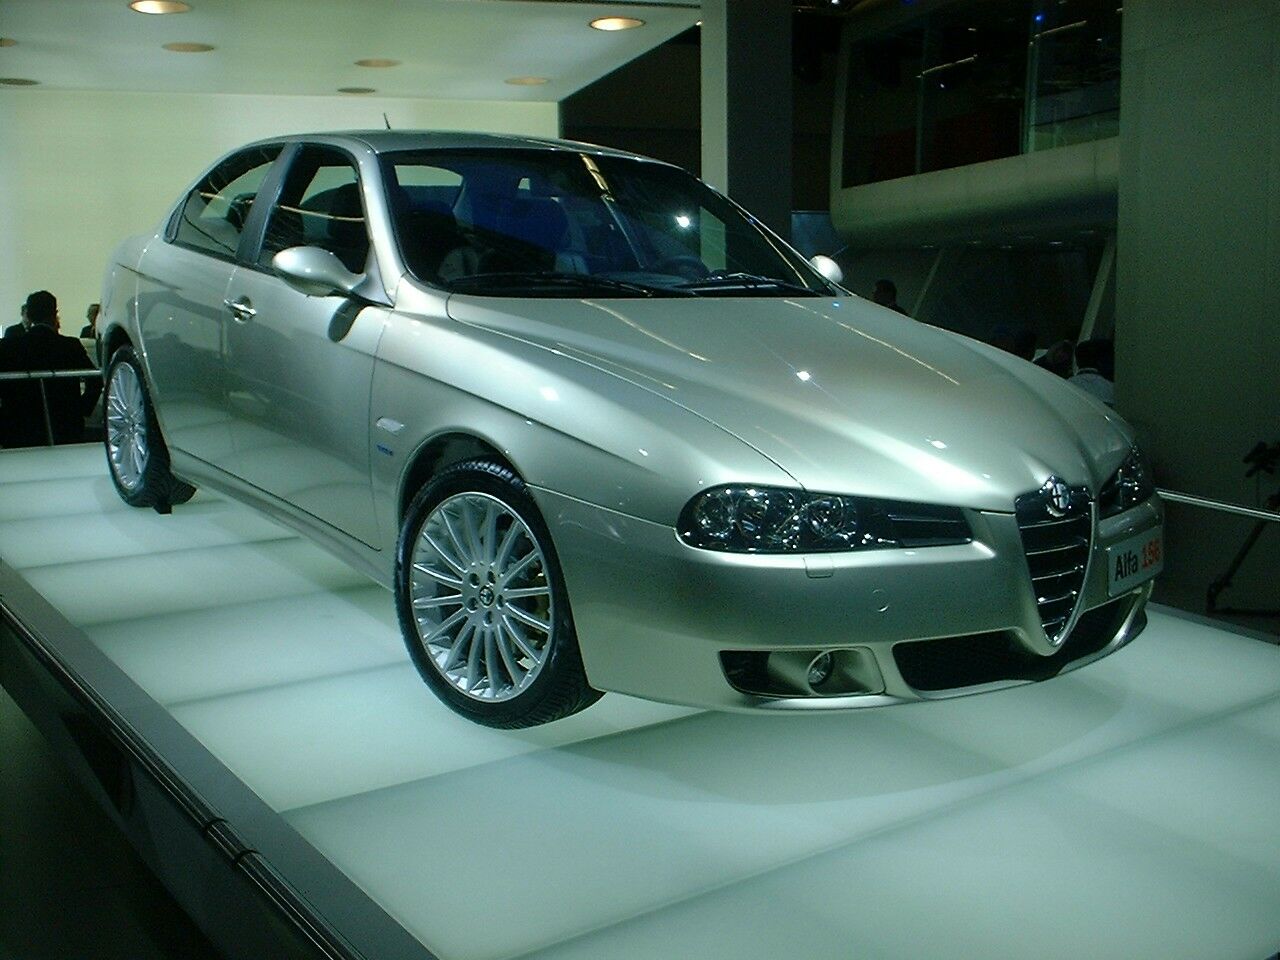 Facelifted Alfa Romeo 156 at the 2003 Frankfurt Motor Show